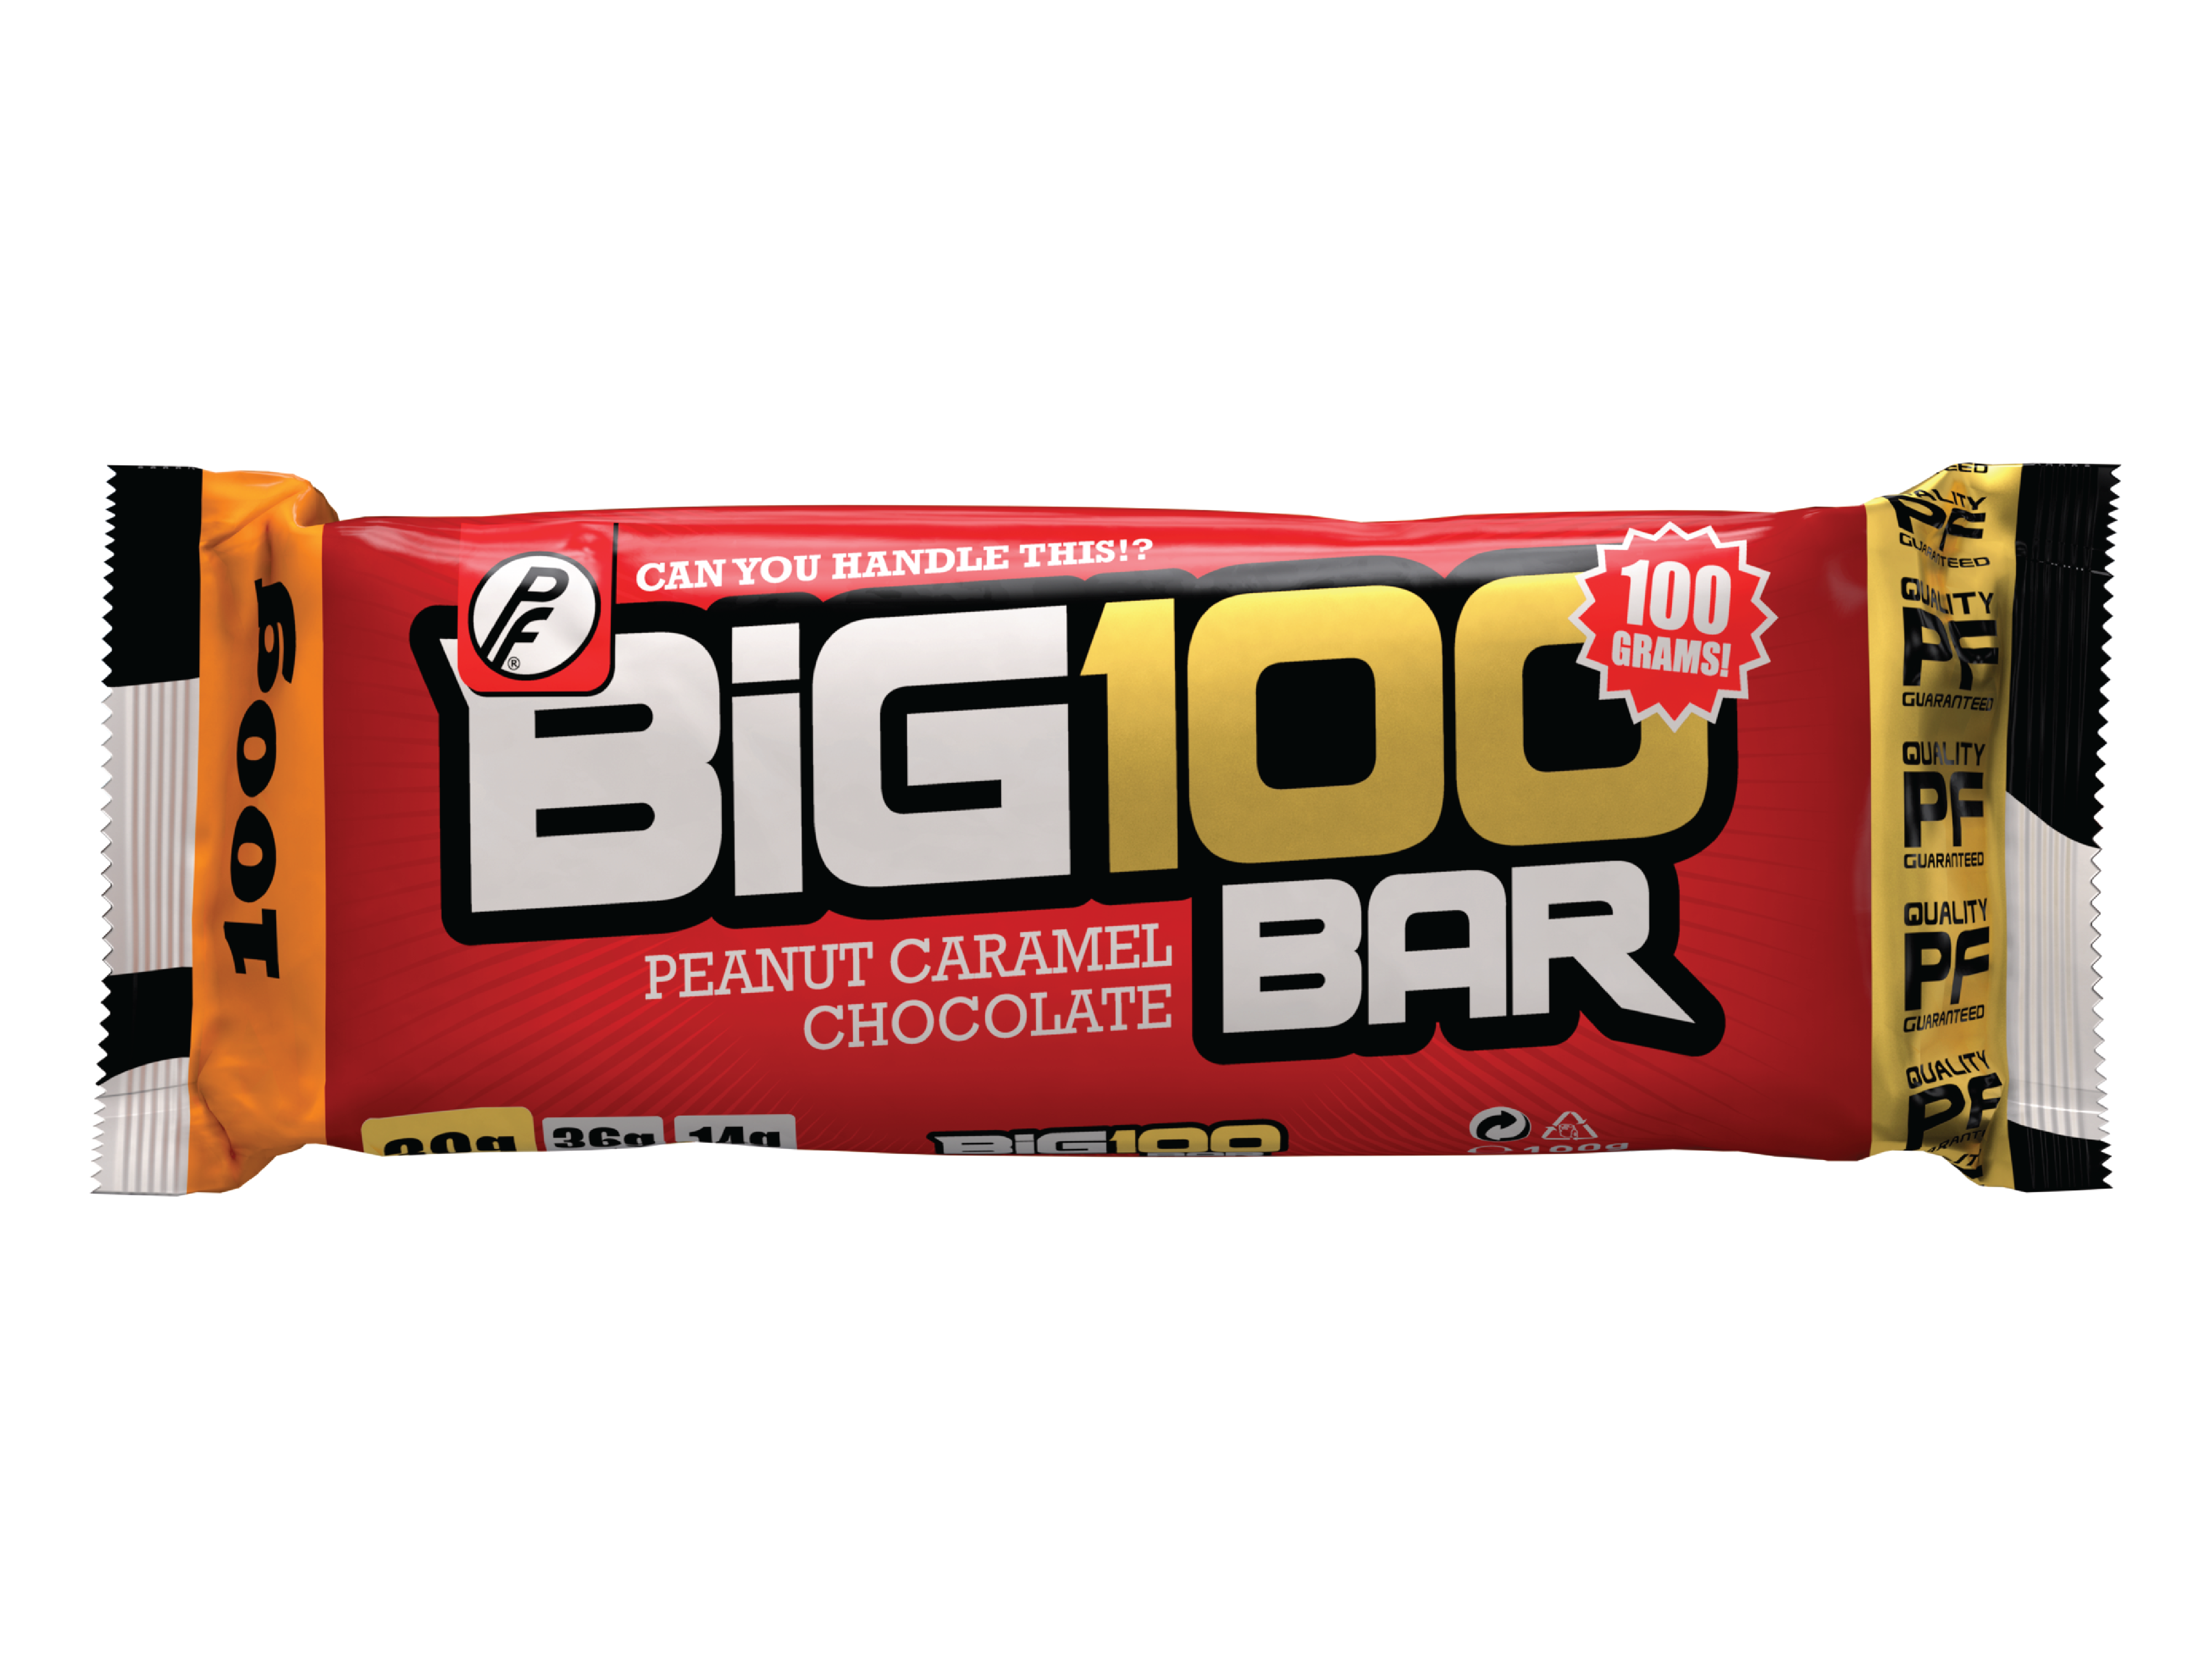 Proteinfabrikken Big Peanut Caramel Proteinbar, 100 g